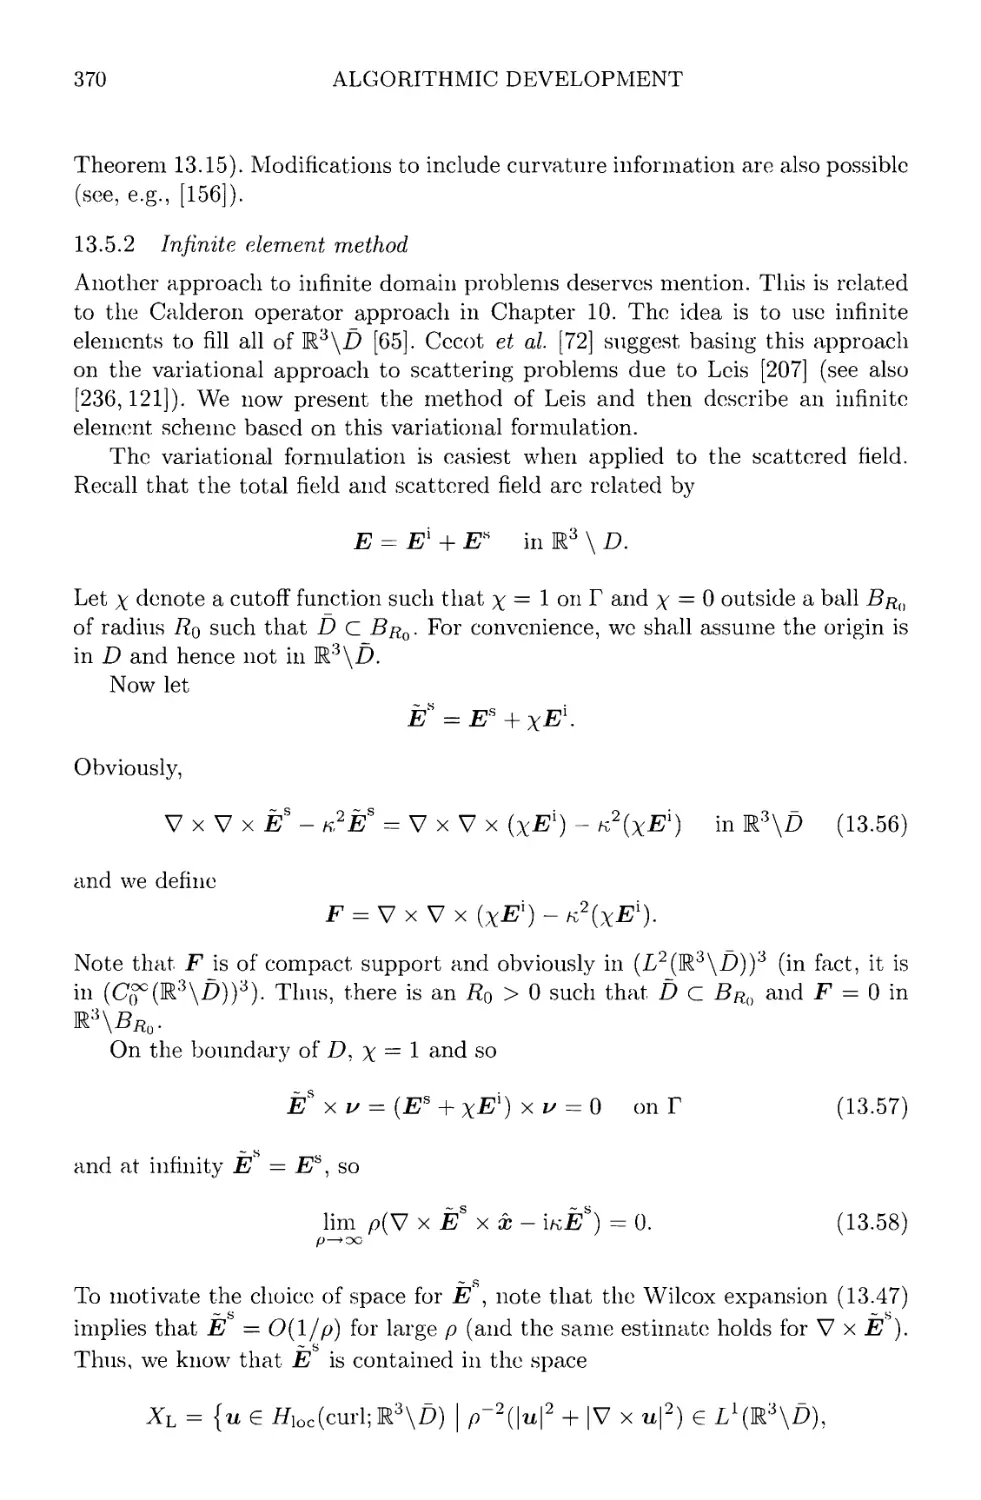 13.5.2 Infinite element method